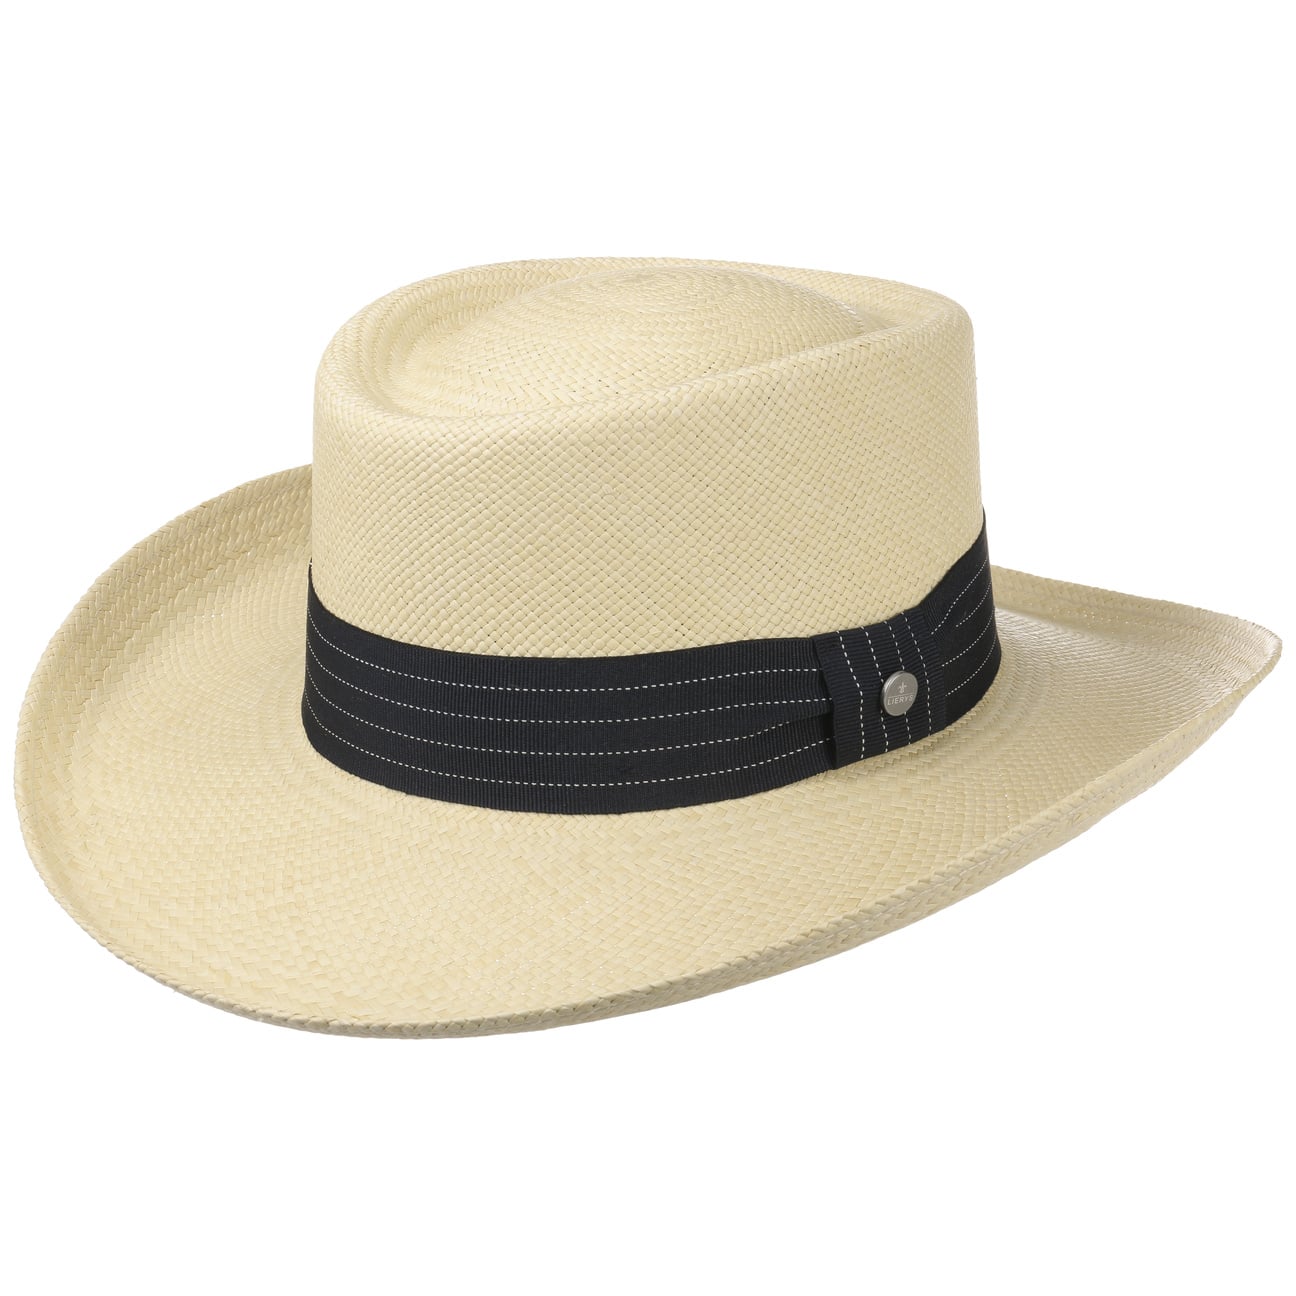 Gambler Panama Hat by Lierys